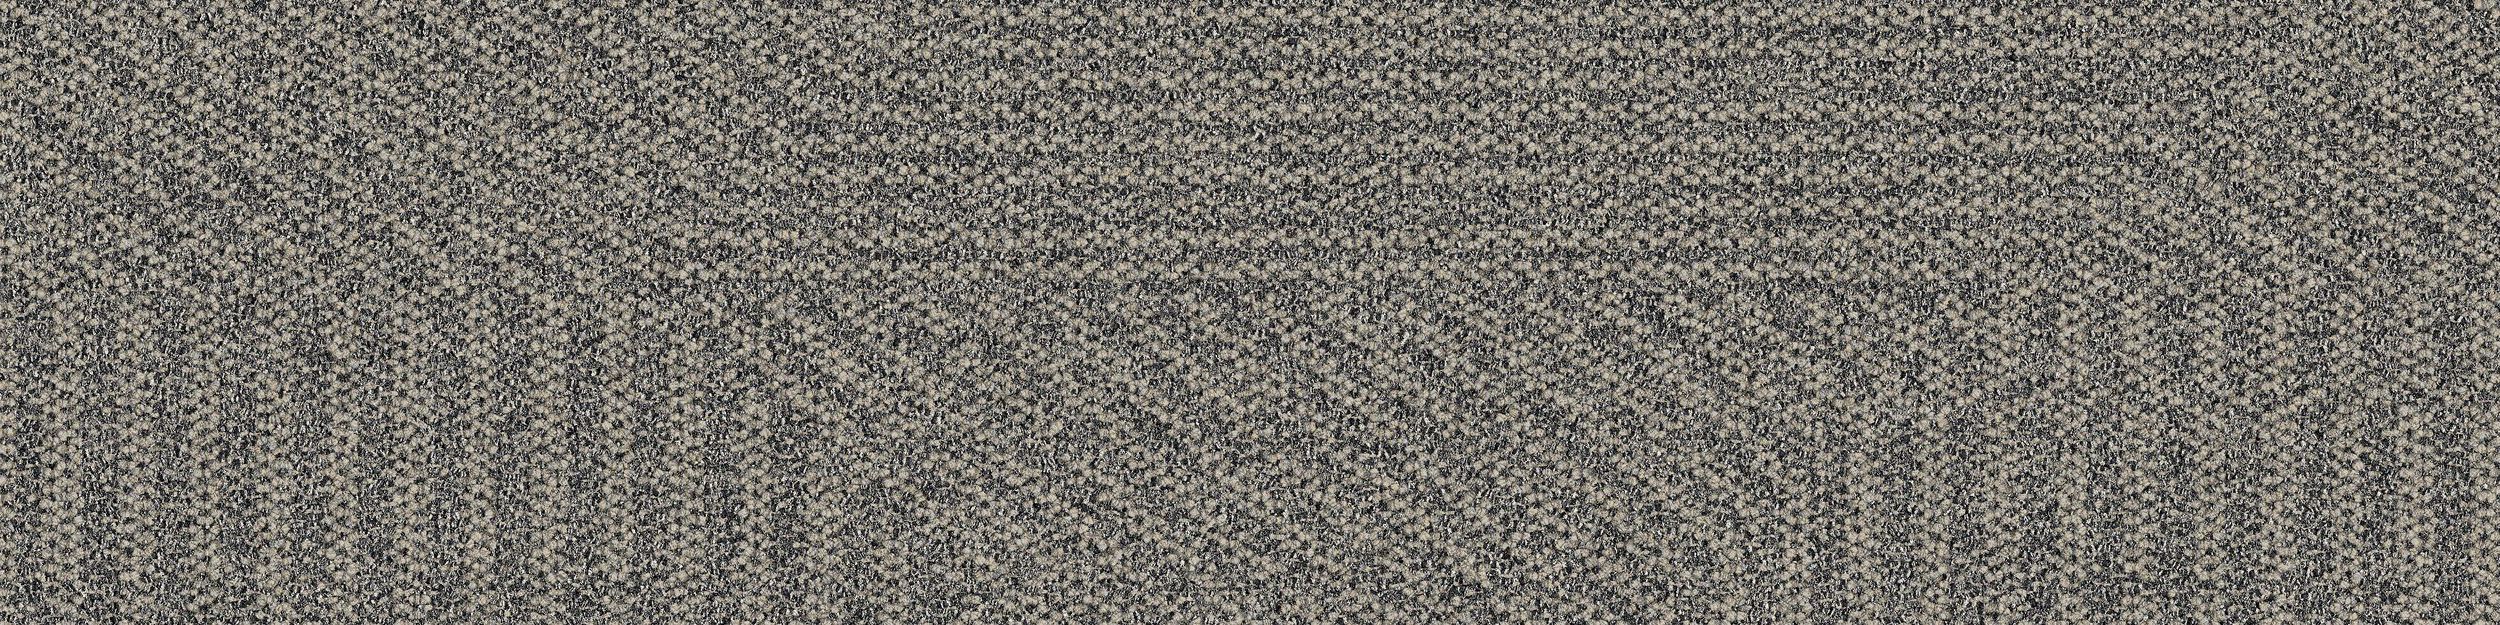 Open Air 407 Carpet Tile In Natural imagen número 2